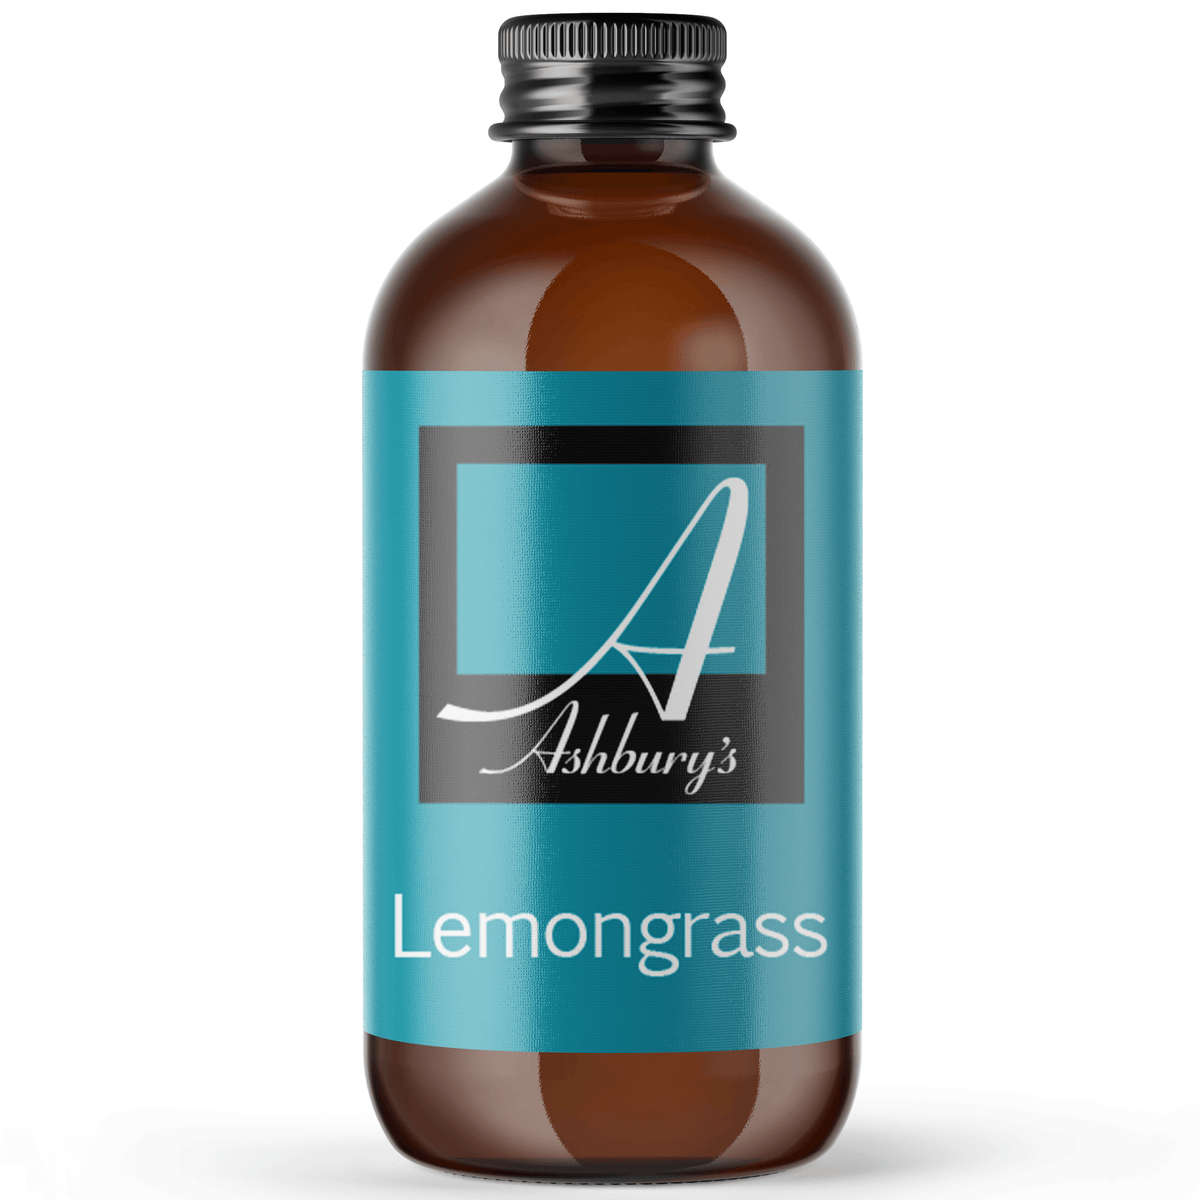 Lemongrass (Cymbopogon flexuosus)